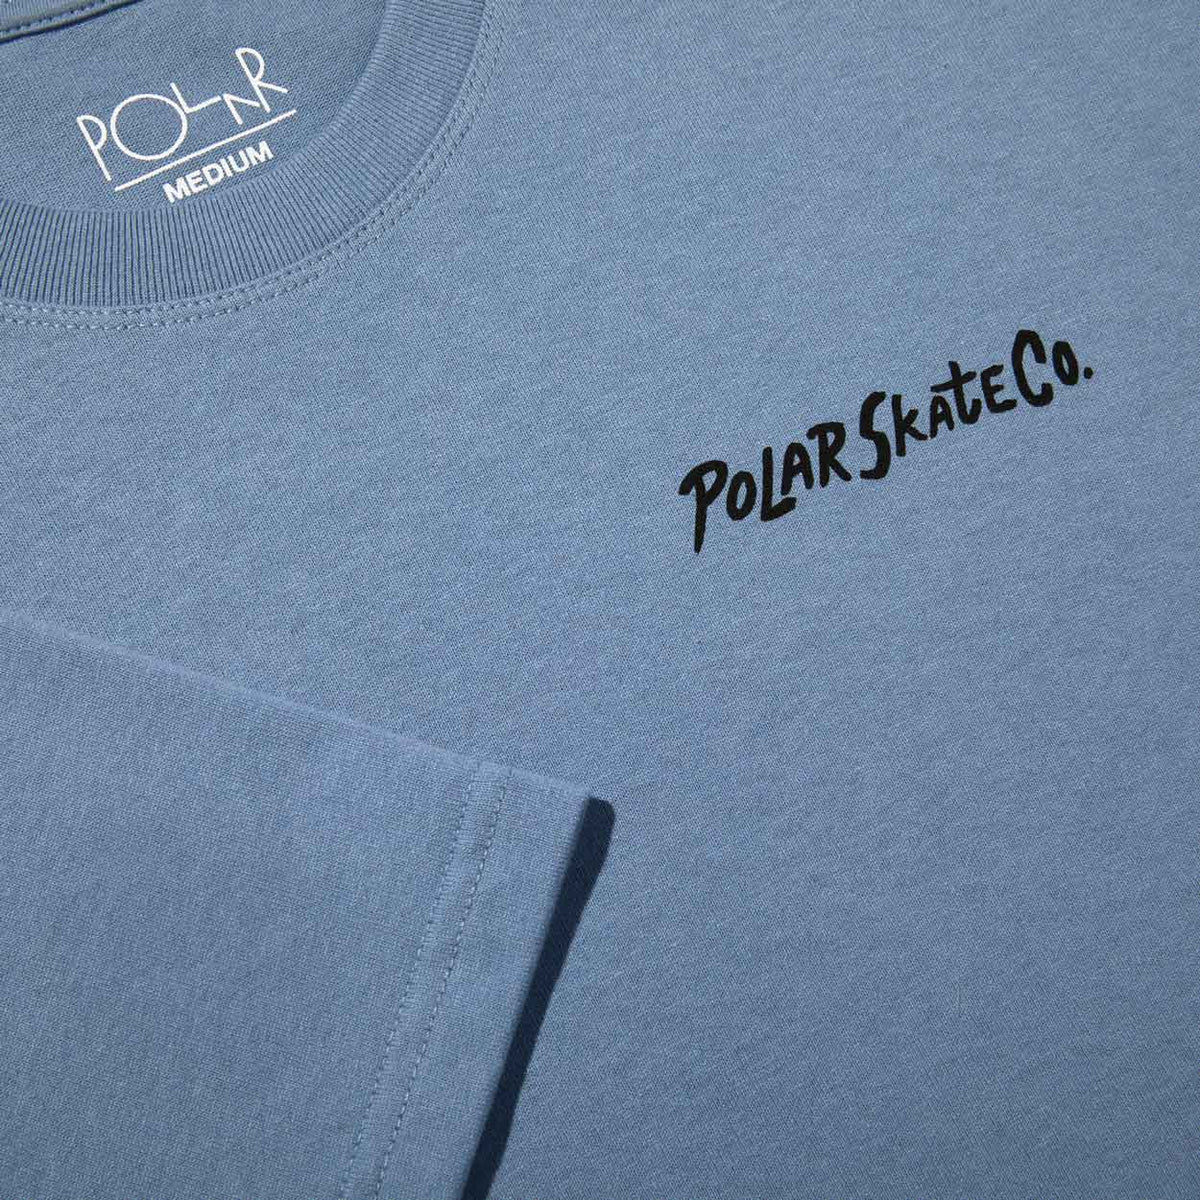 Polar Yoga Trppin&#39; T-Shirt - Oxford Blue - Mens Skate Brand T-Shirt by Polar